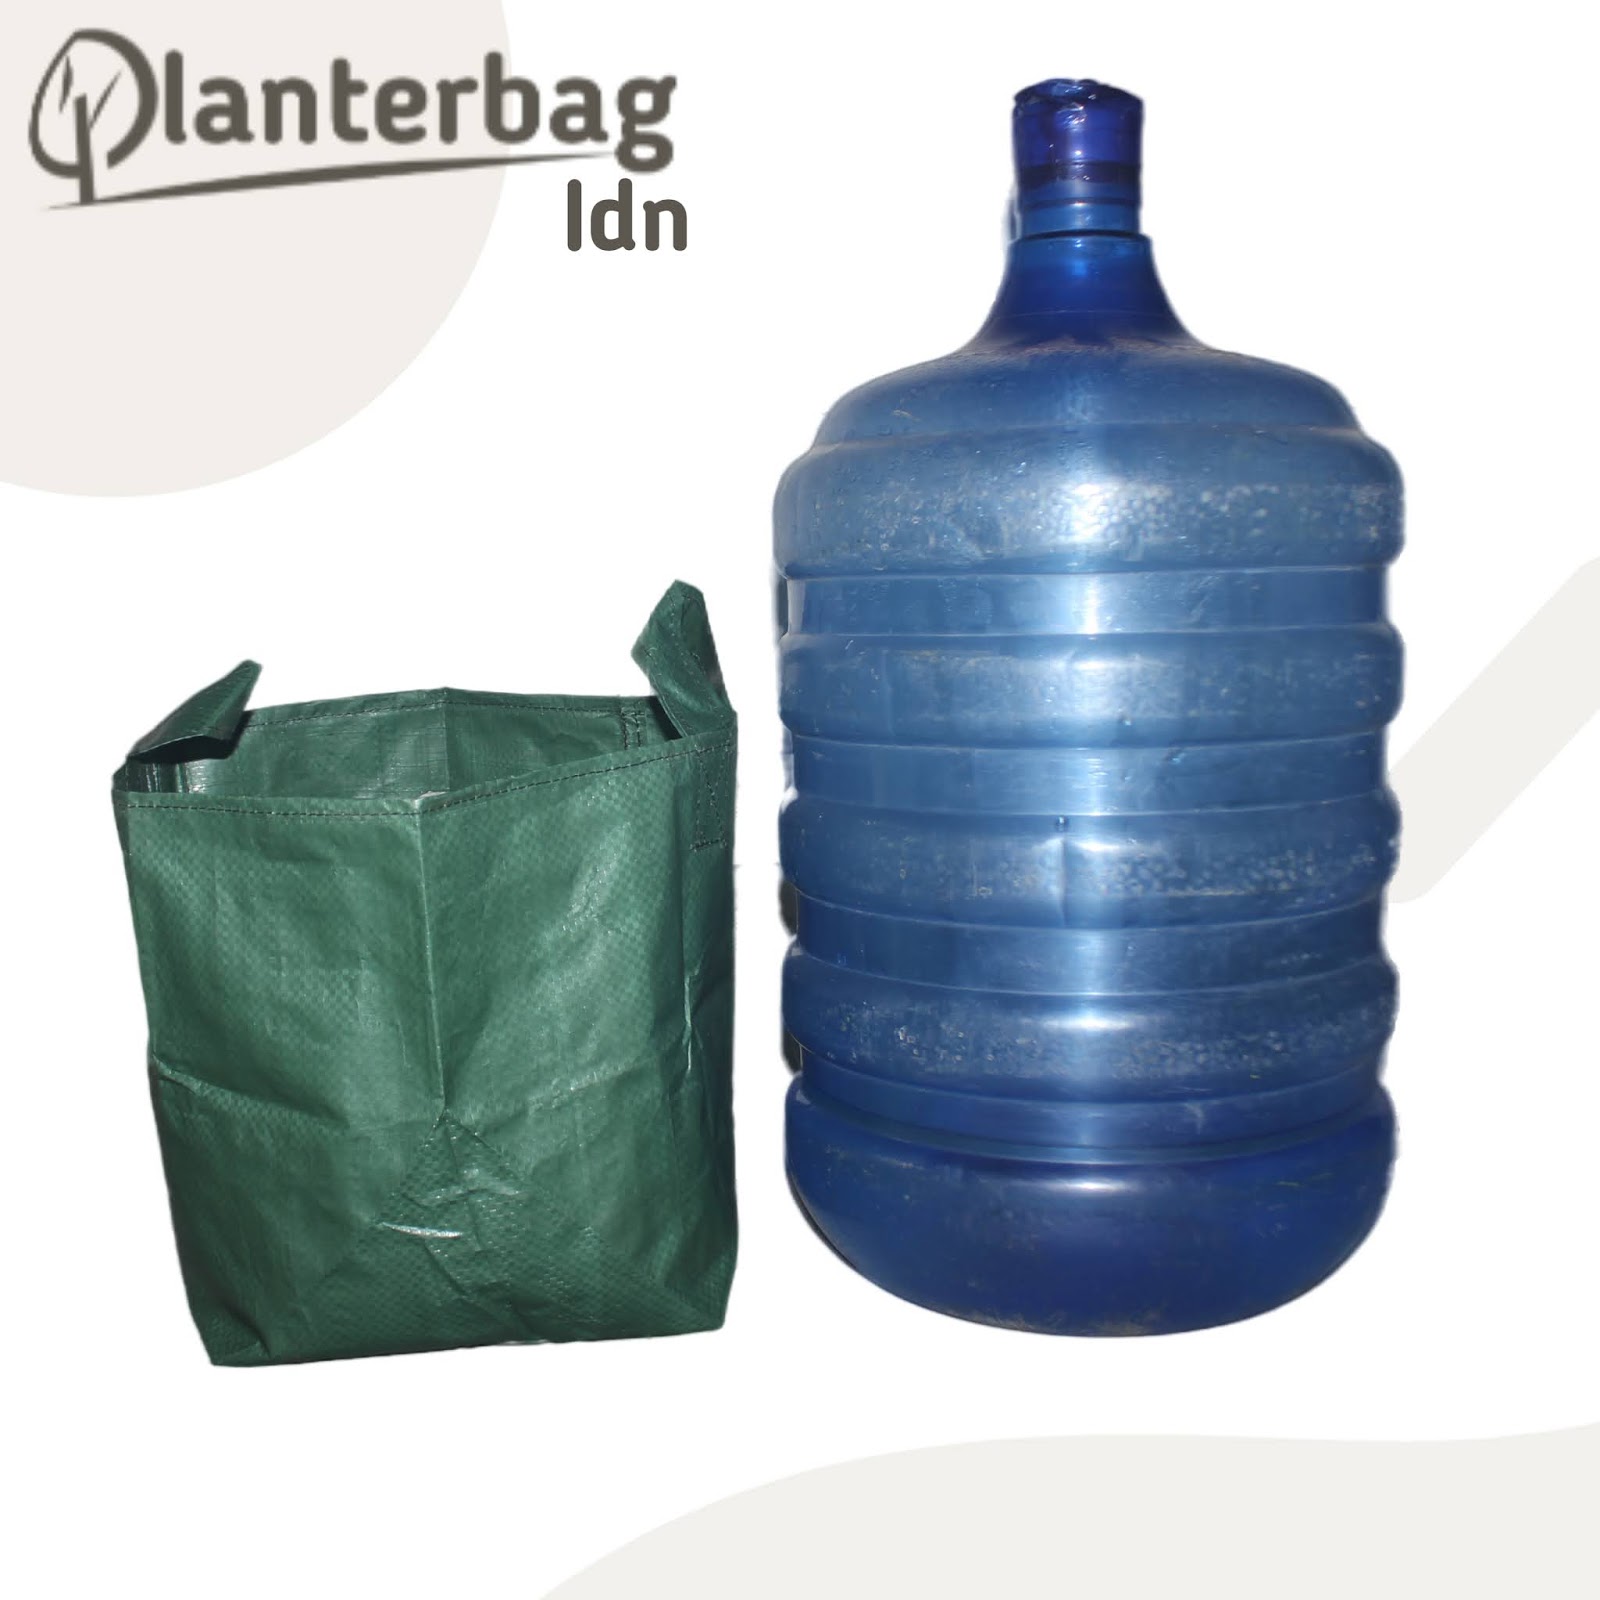 Planter bag 15 Liter